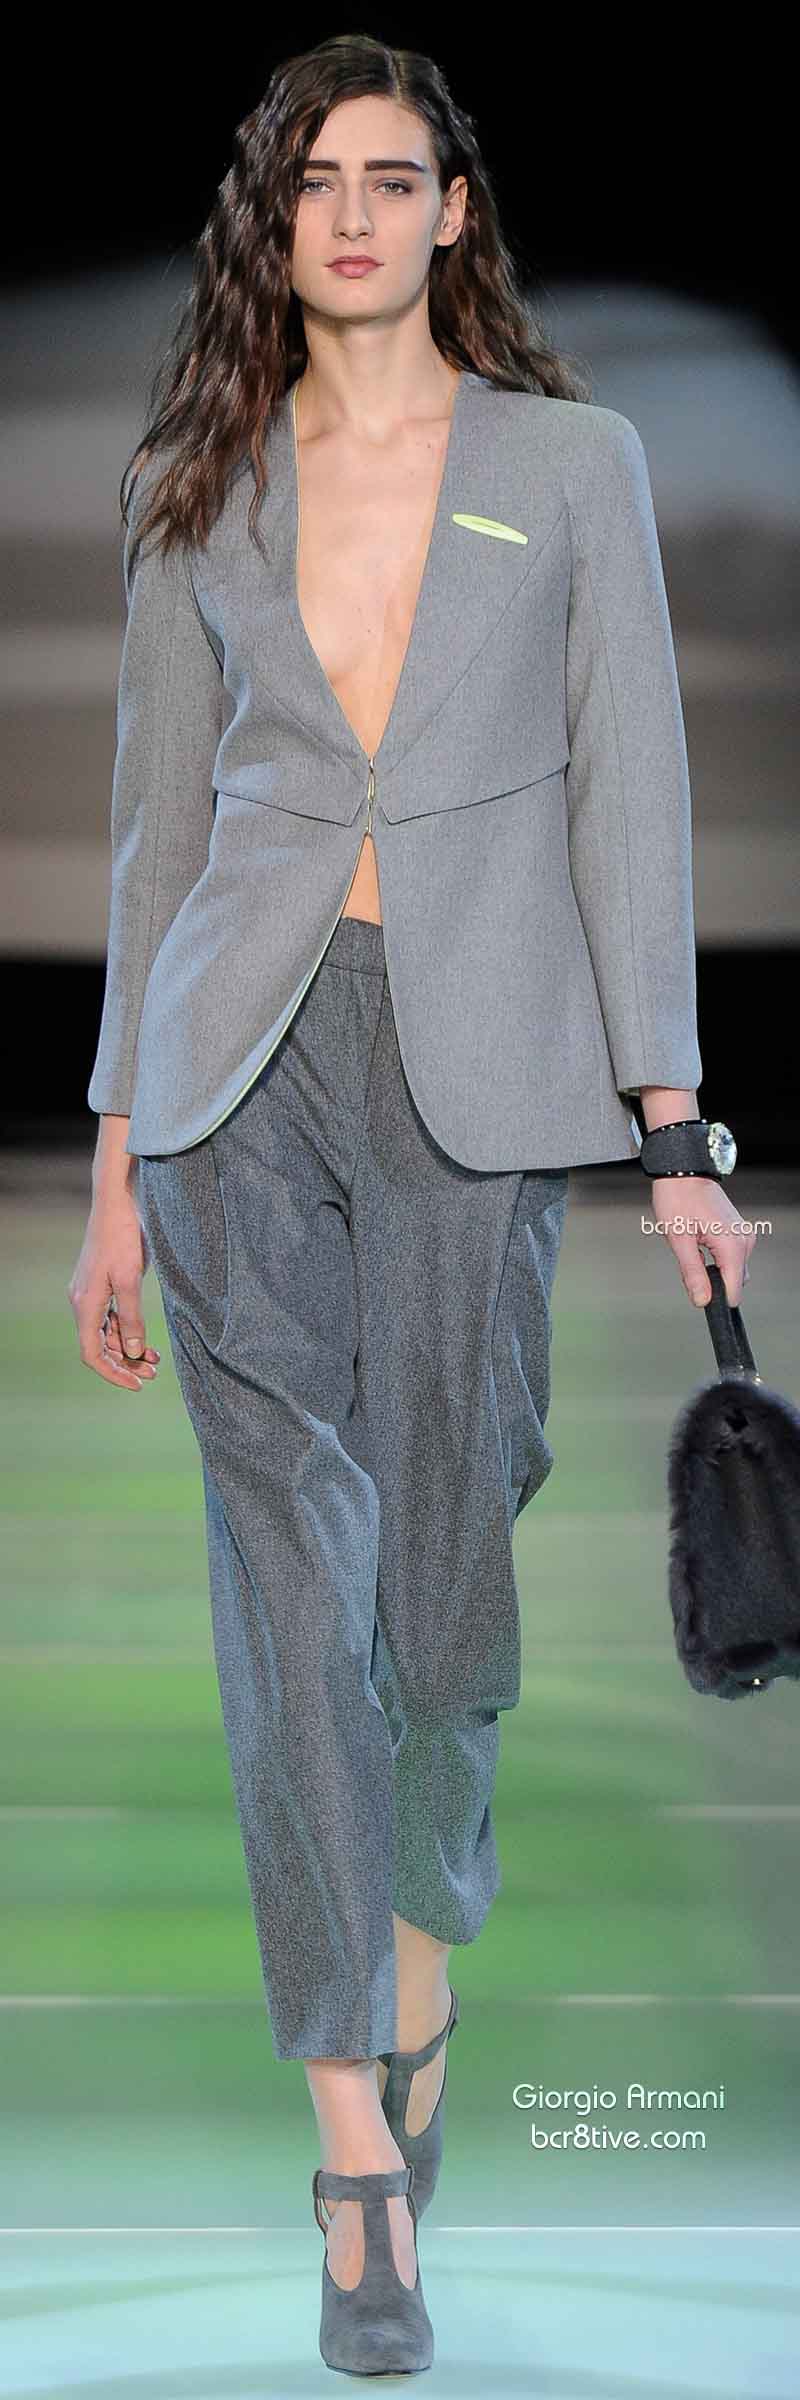 Fall 2014 Menswear Inspired Fashion - Giorgio Armani